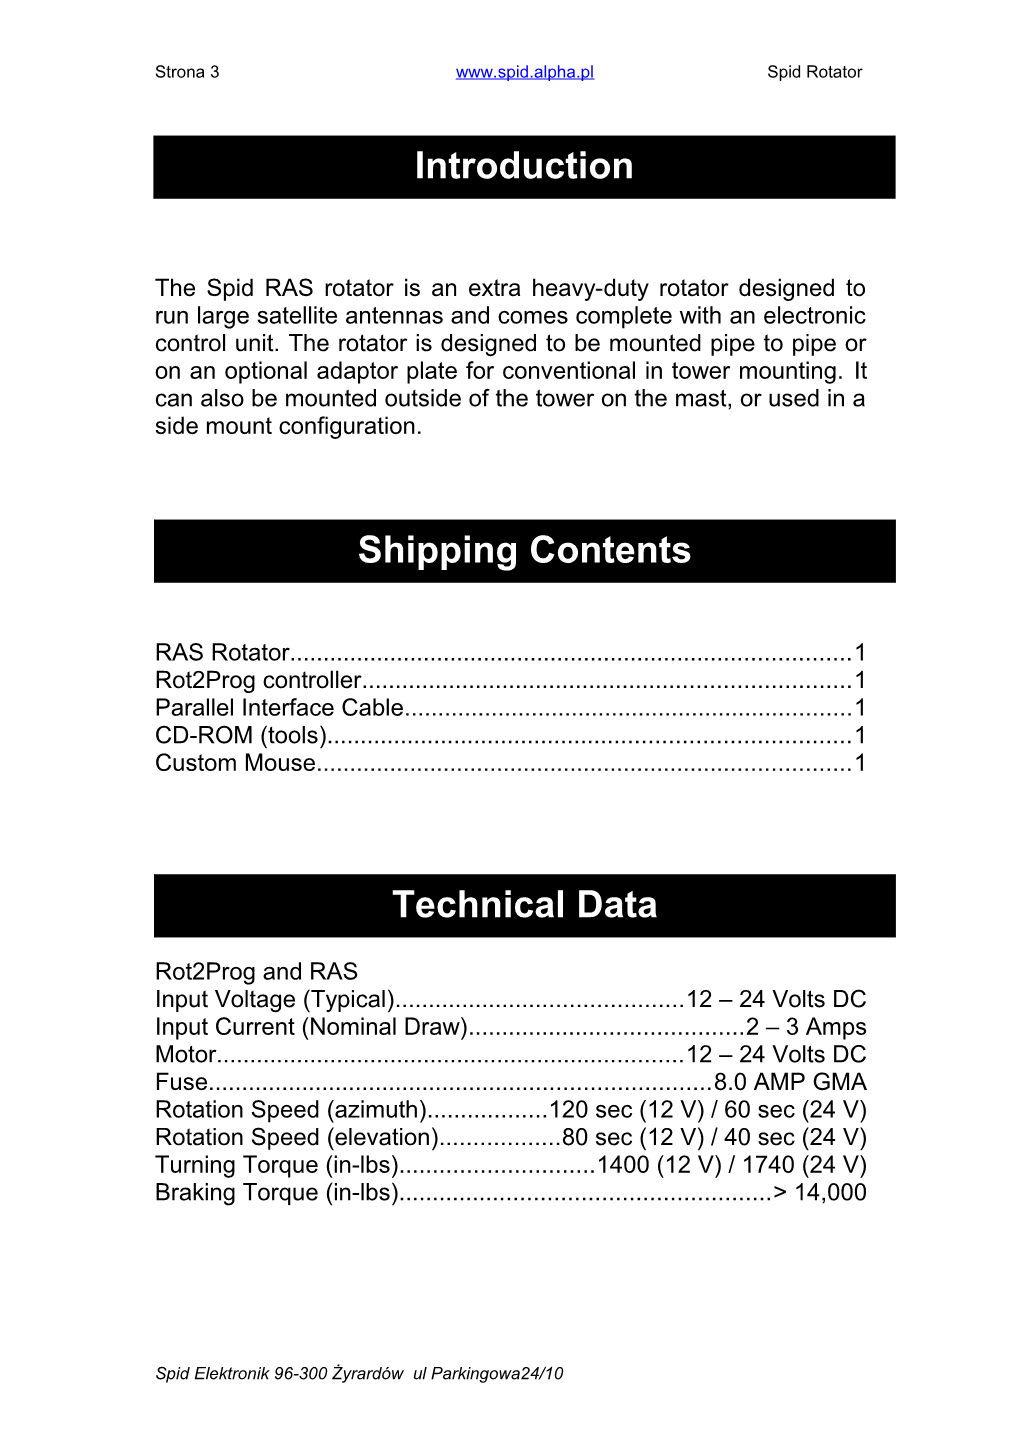 Alfaspid Rotator Manual